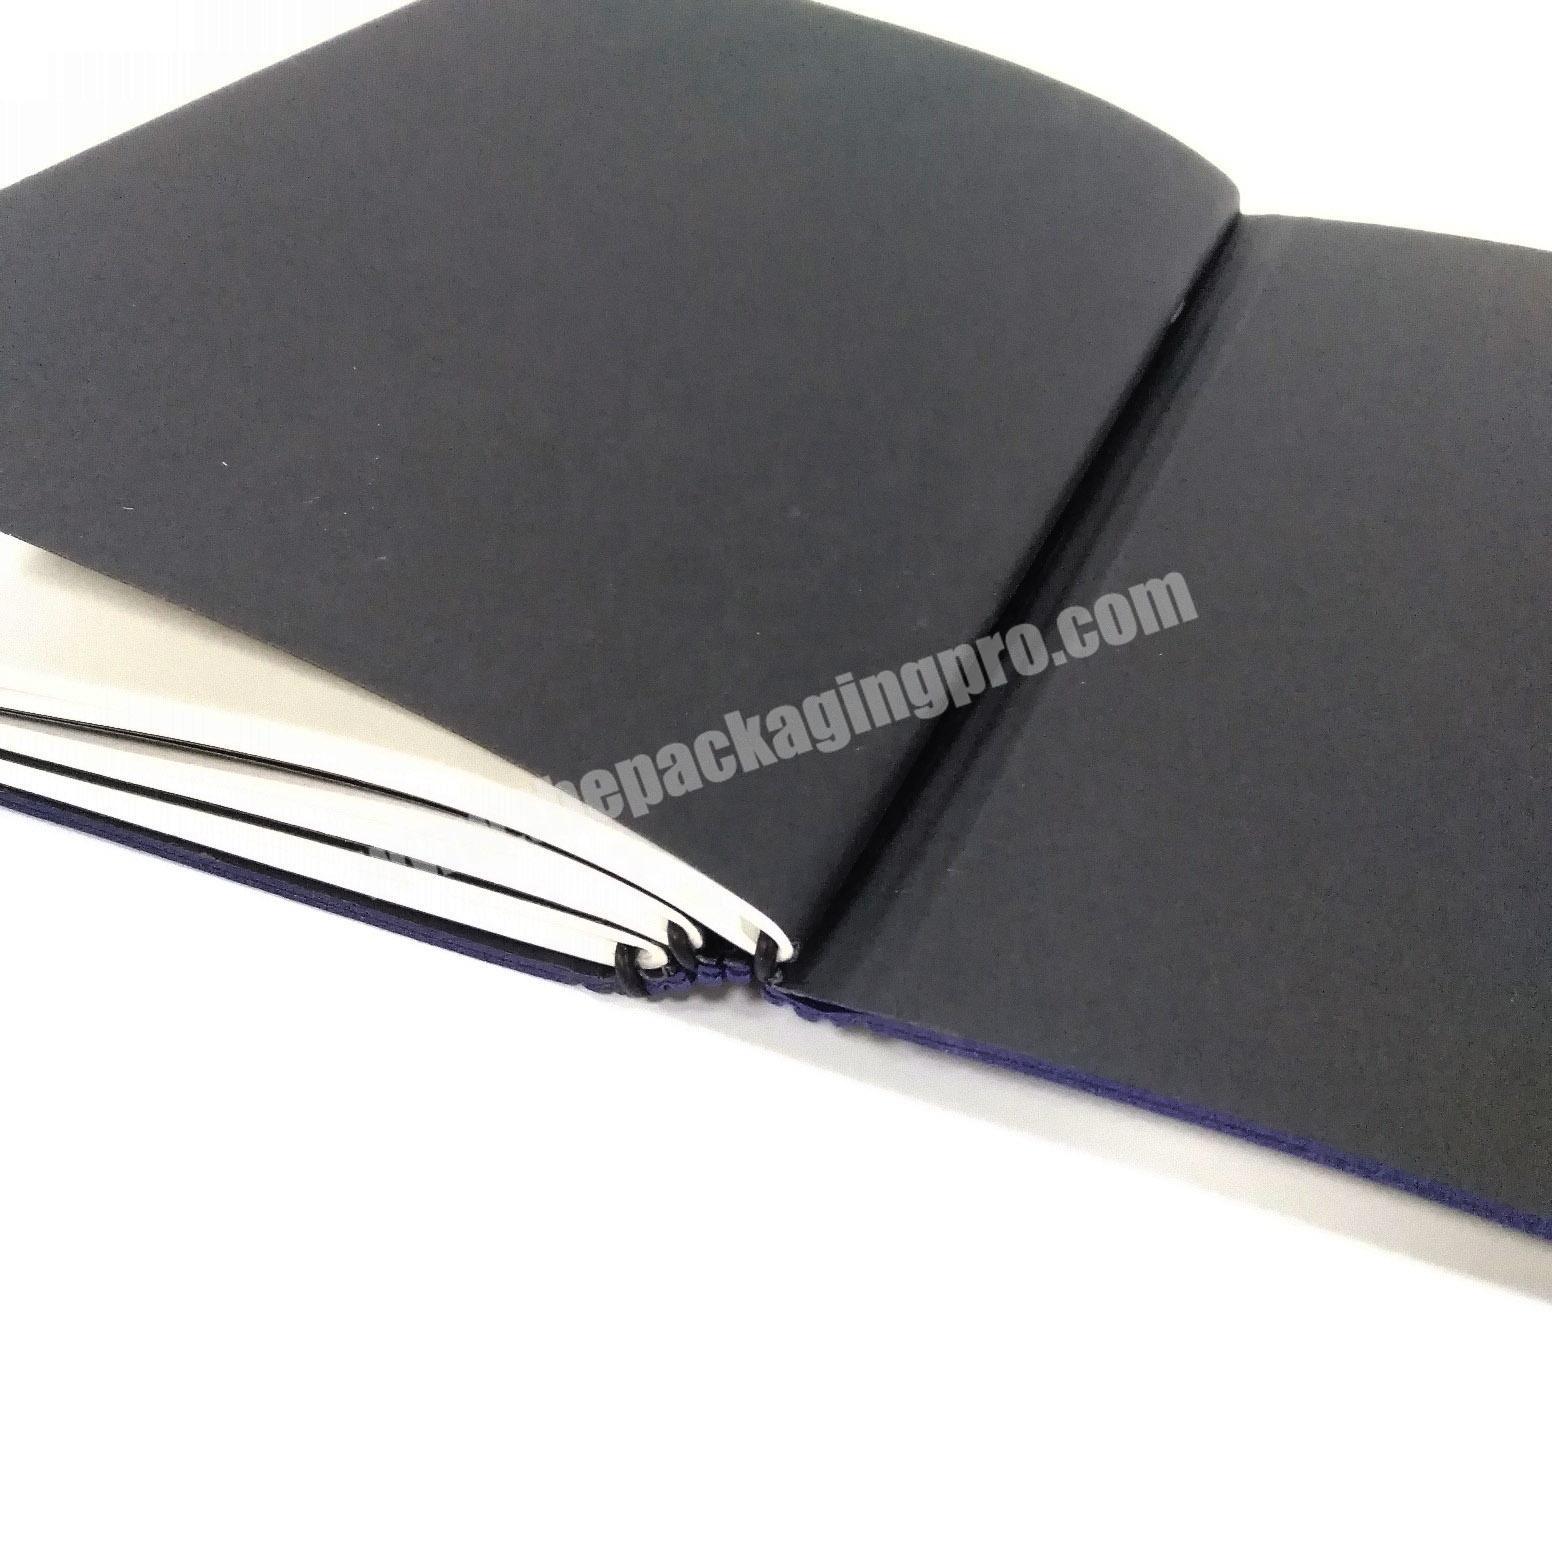 Hot sale custom diary business agenda promotional journal writing notebook